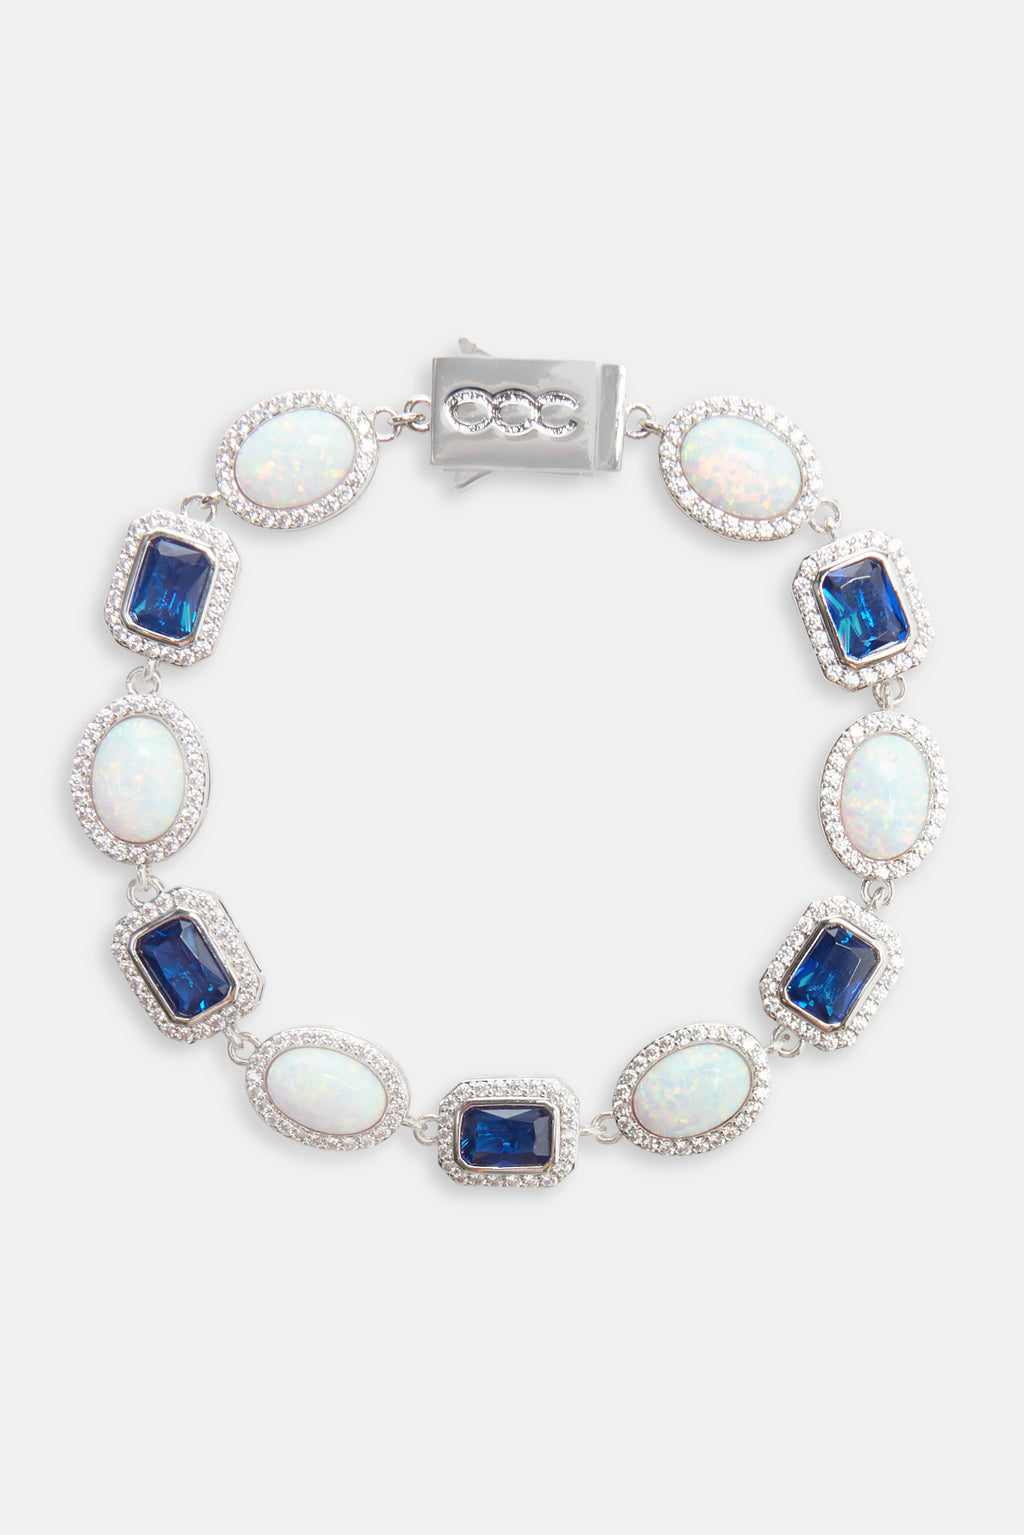 8.50 * 8.00 Blue Gemstone Lapis Lazuli Bracelet at Rs 200/piece in Kashipur  | ID: 2852656973591